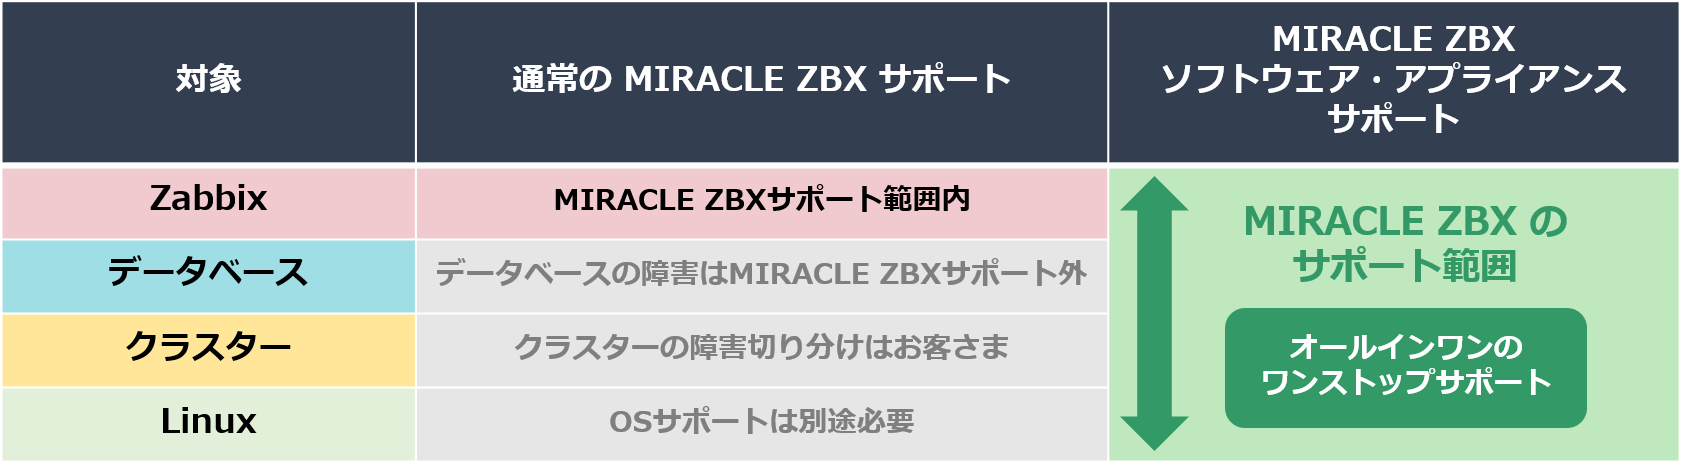 MIRACLE ZBX Virtual Appliance は安心のオールインワン・ワンストップサポート